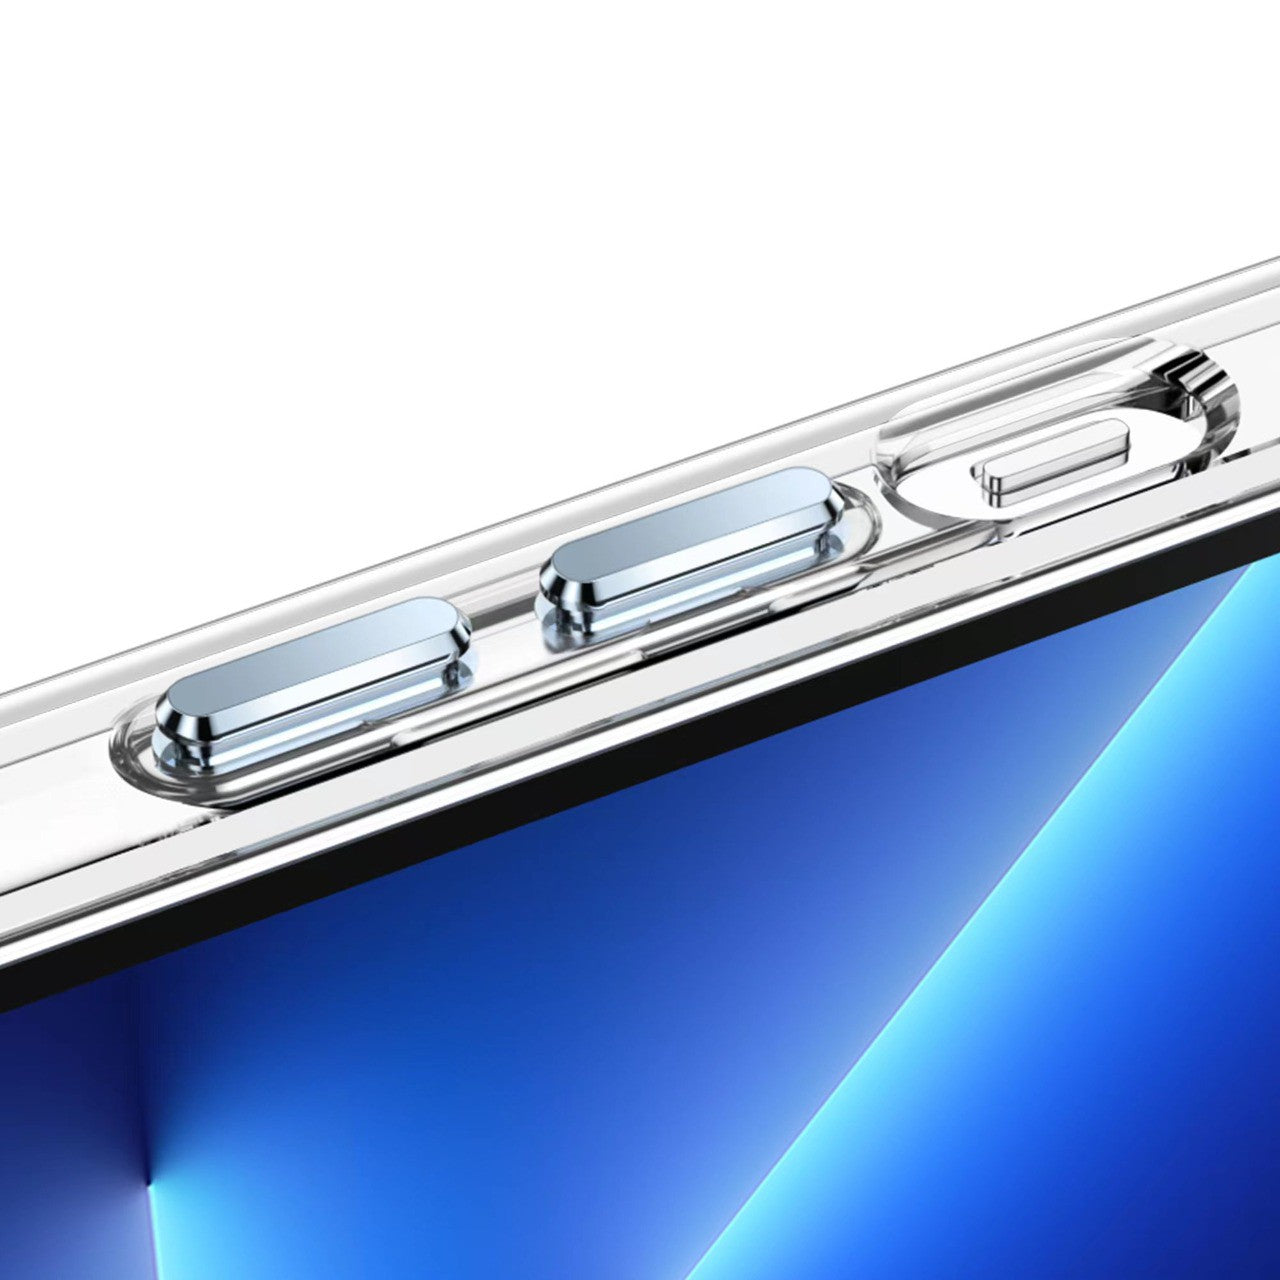 Green Lion  Metallic Frame TPU Transparent Case for iPhone 13 pro